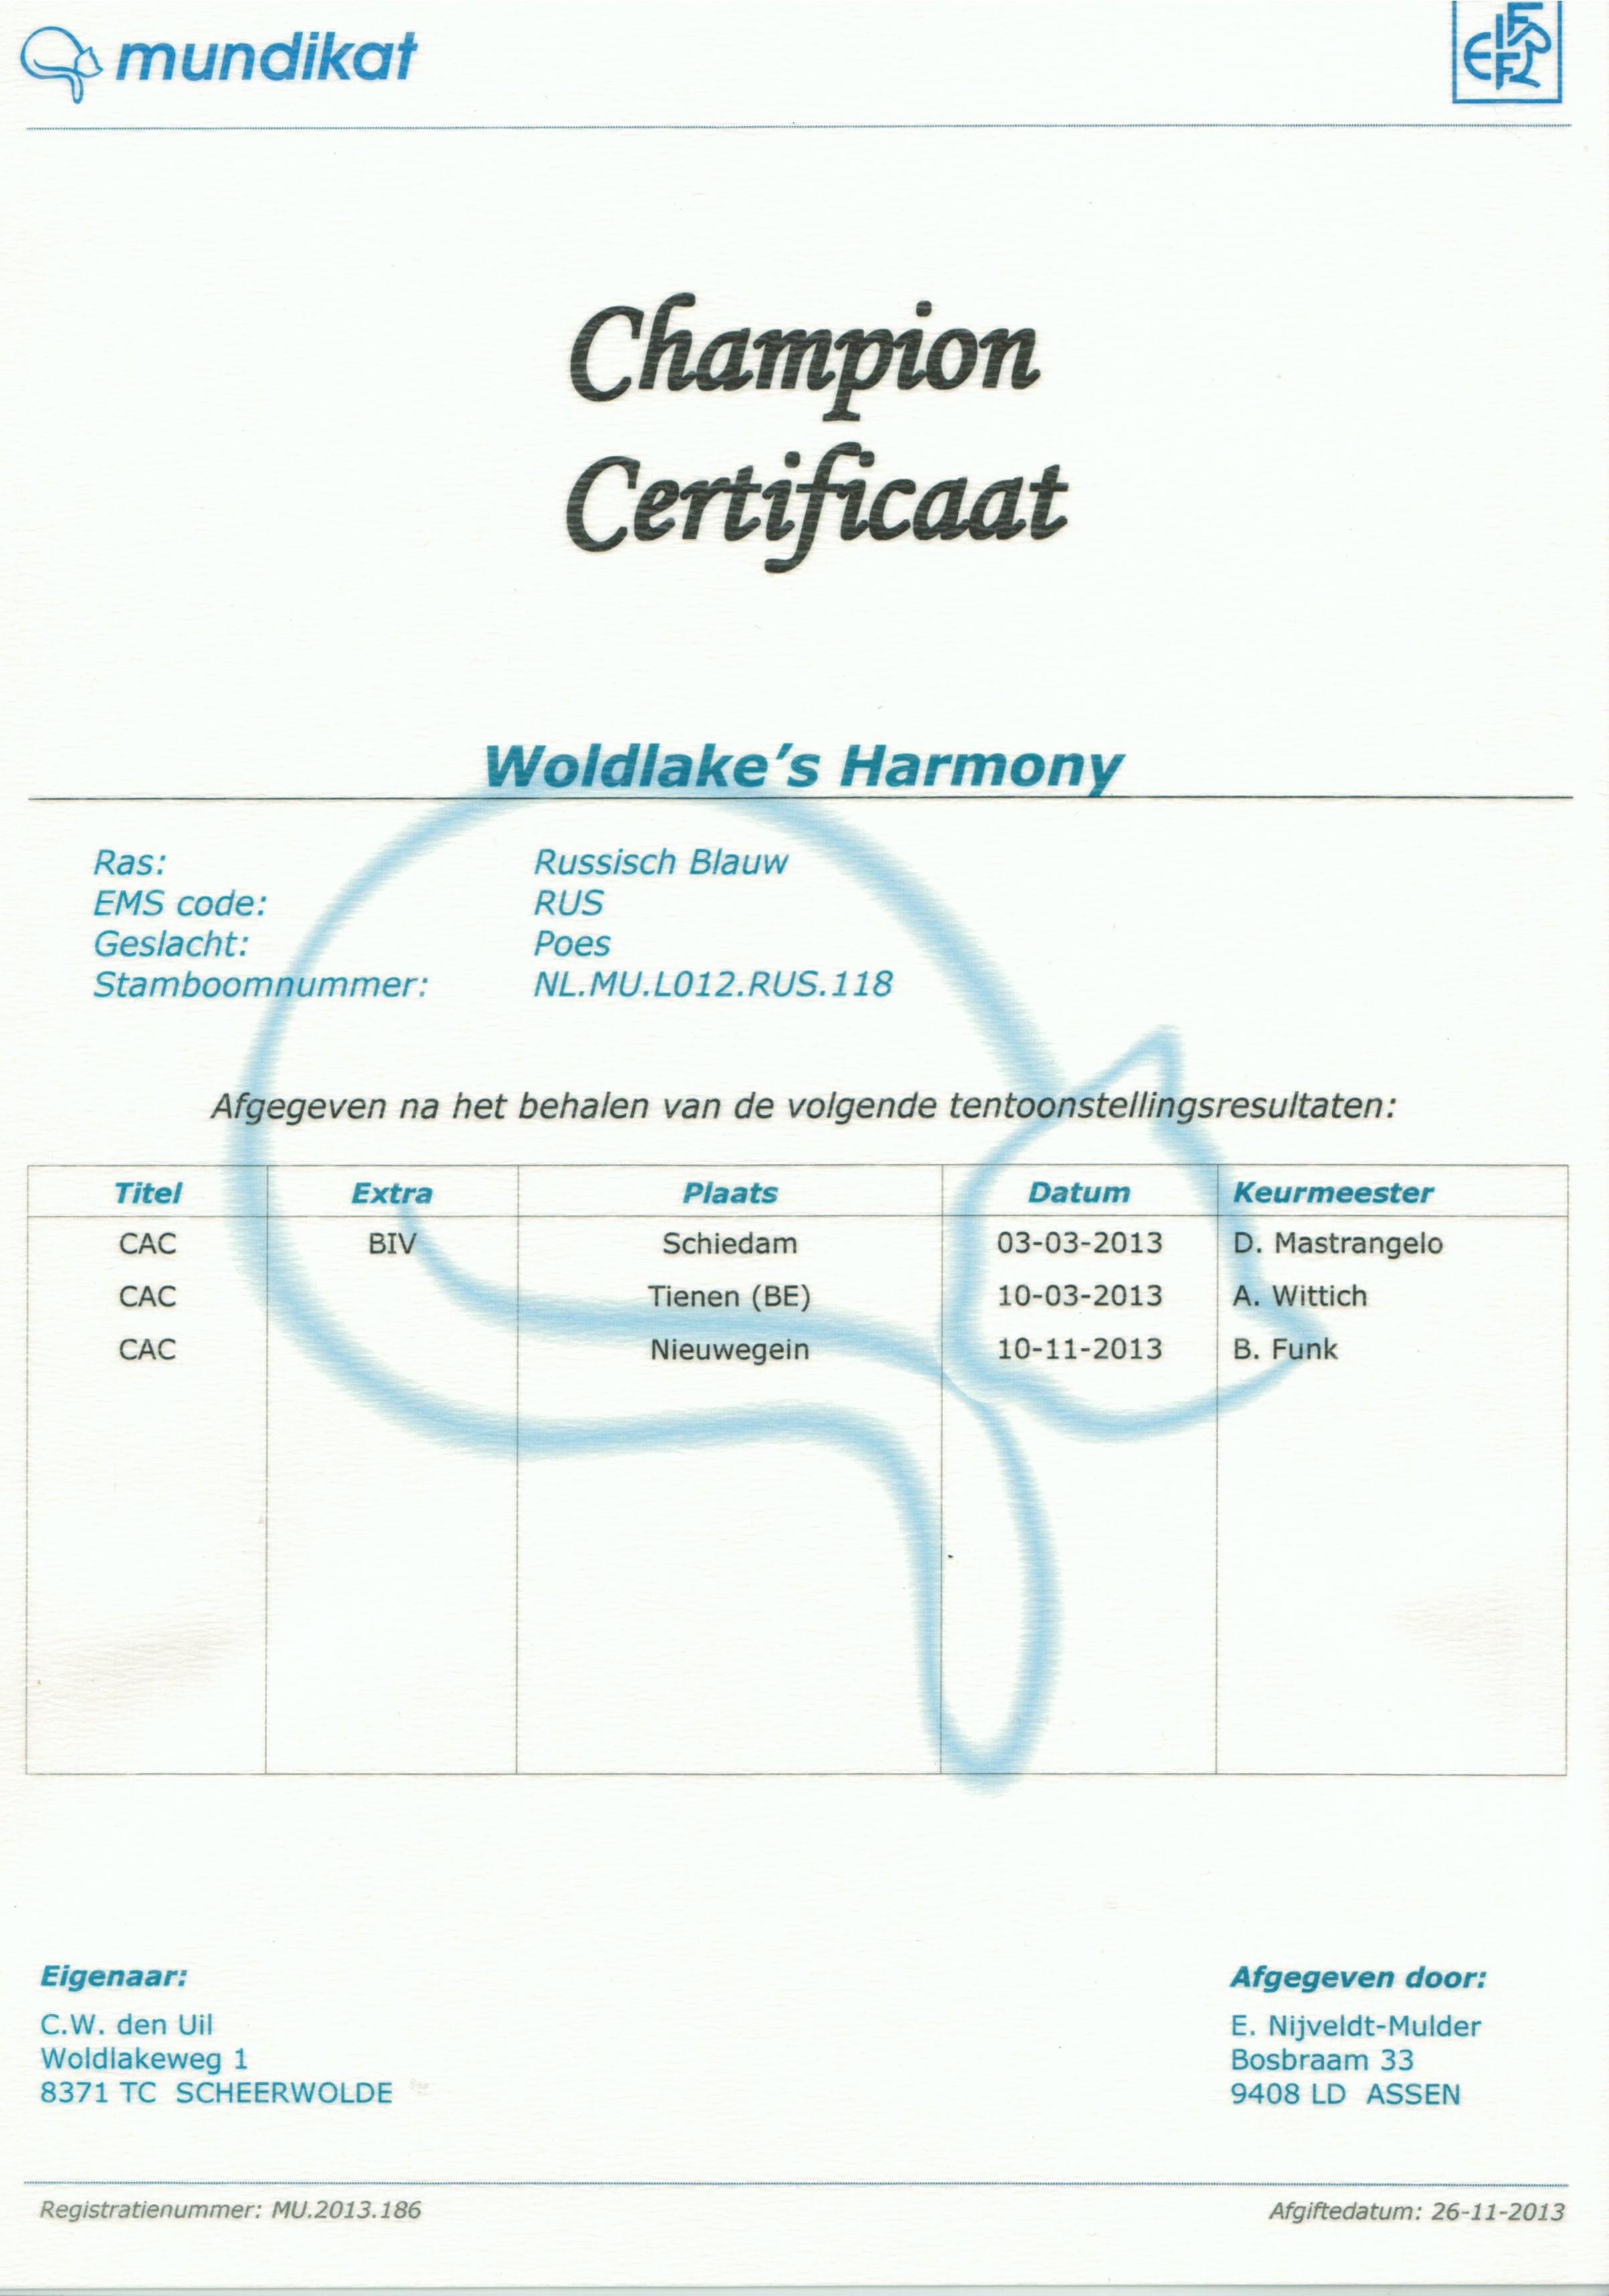 Champion certificaat Woldlake's Harmony.jpg